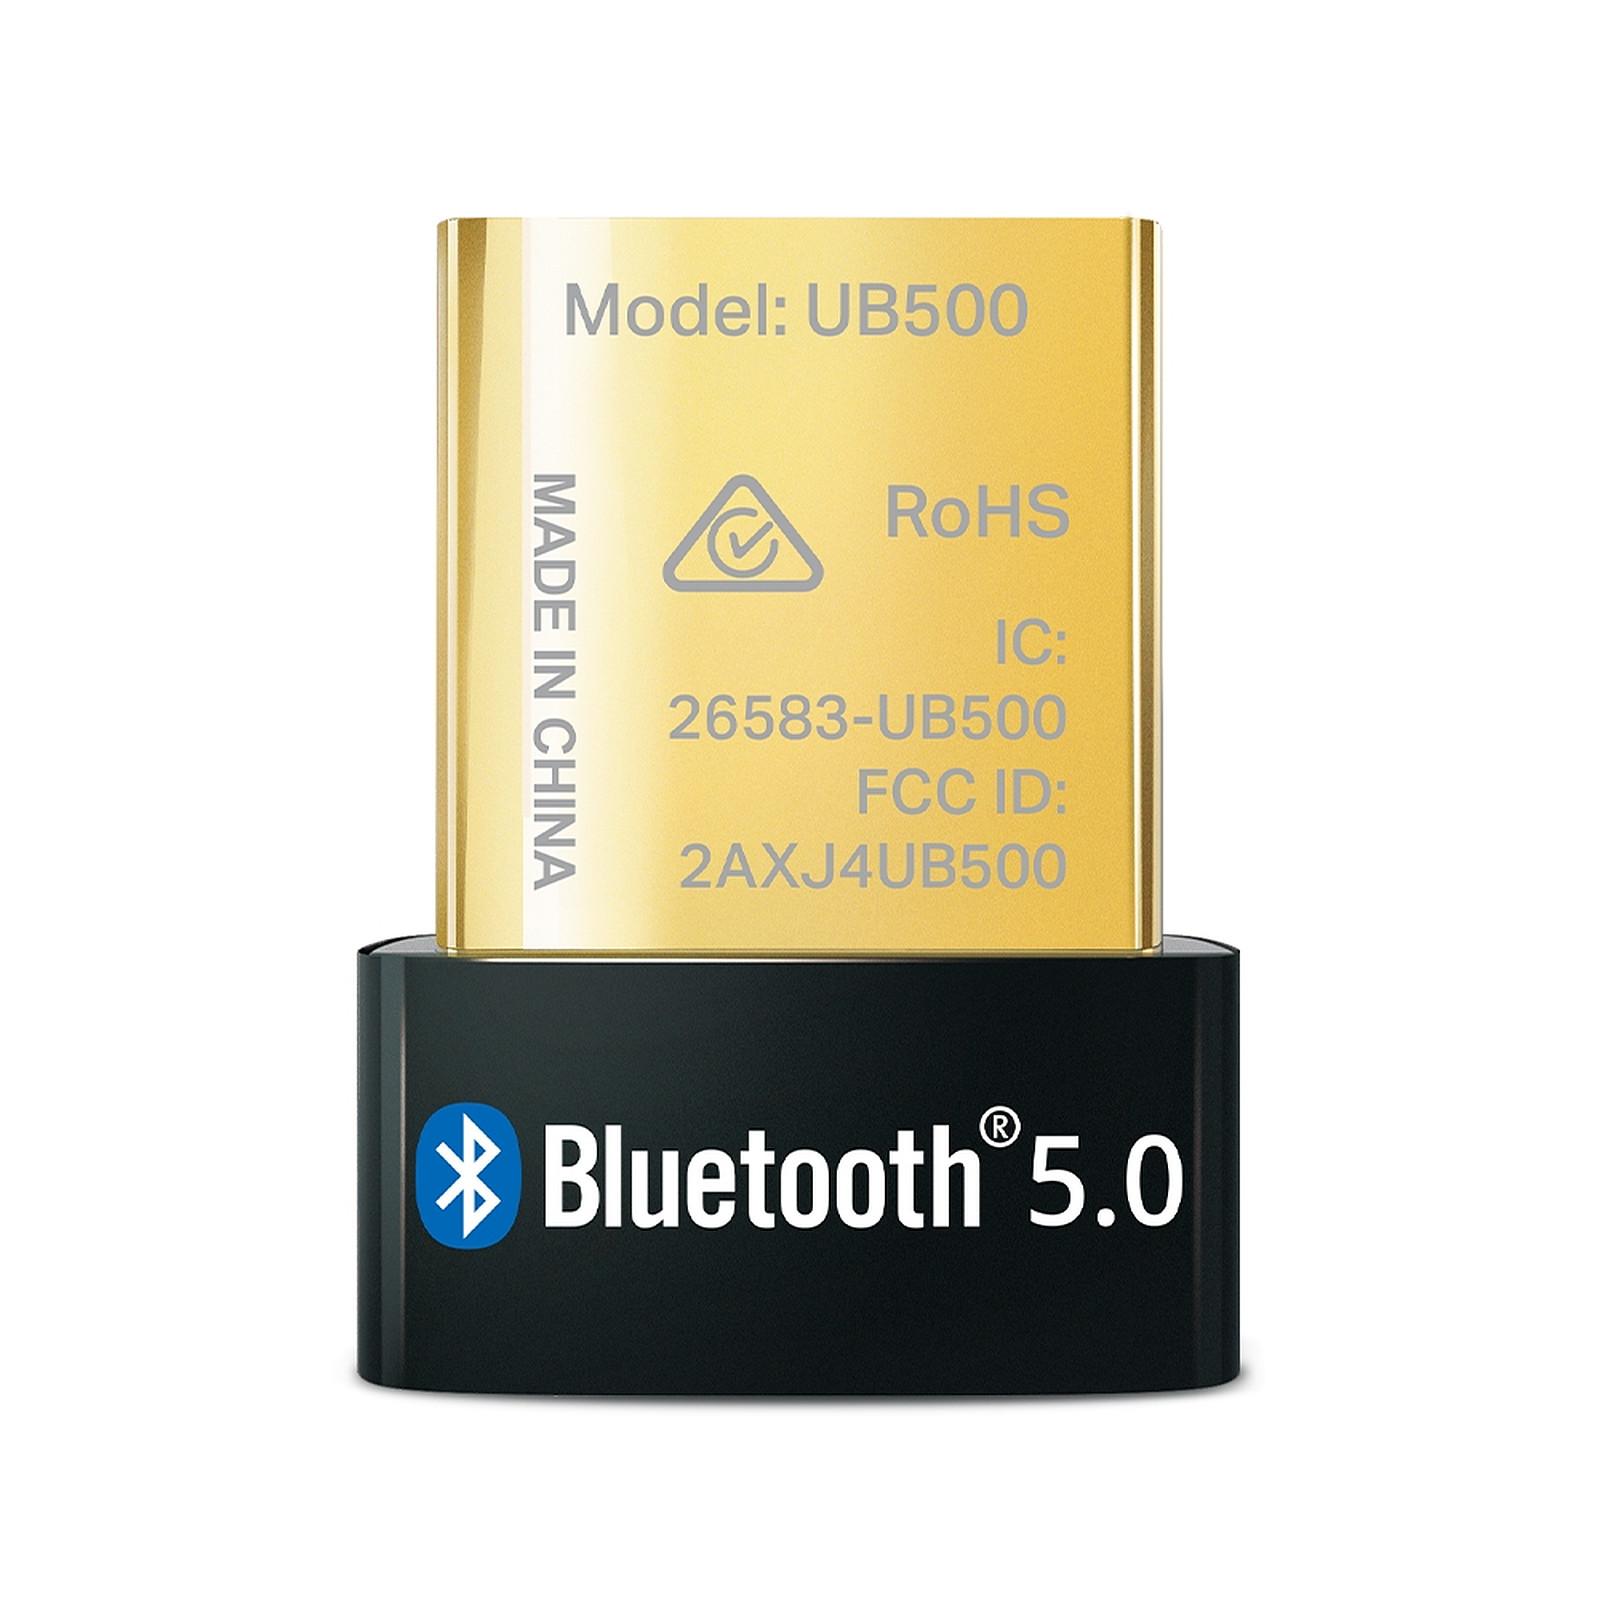 TP-LINK UB500 BLUETOOTH 5.0 USB ADAPTER